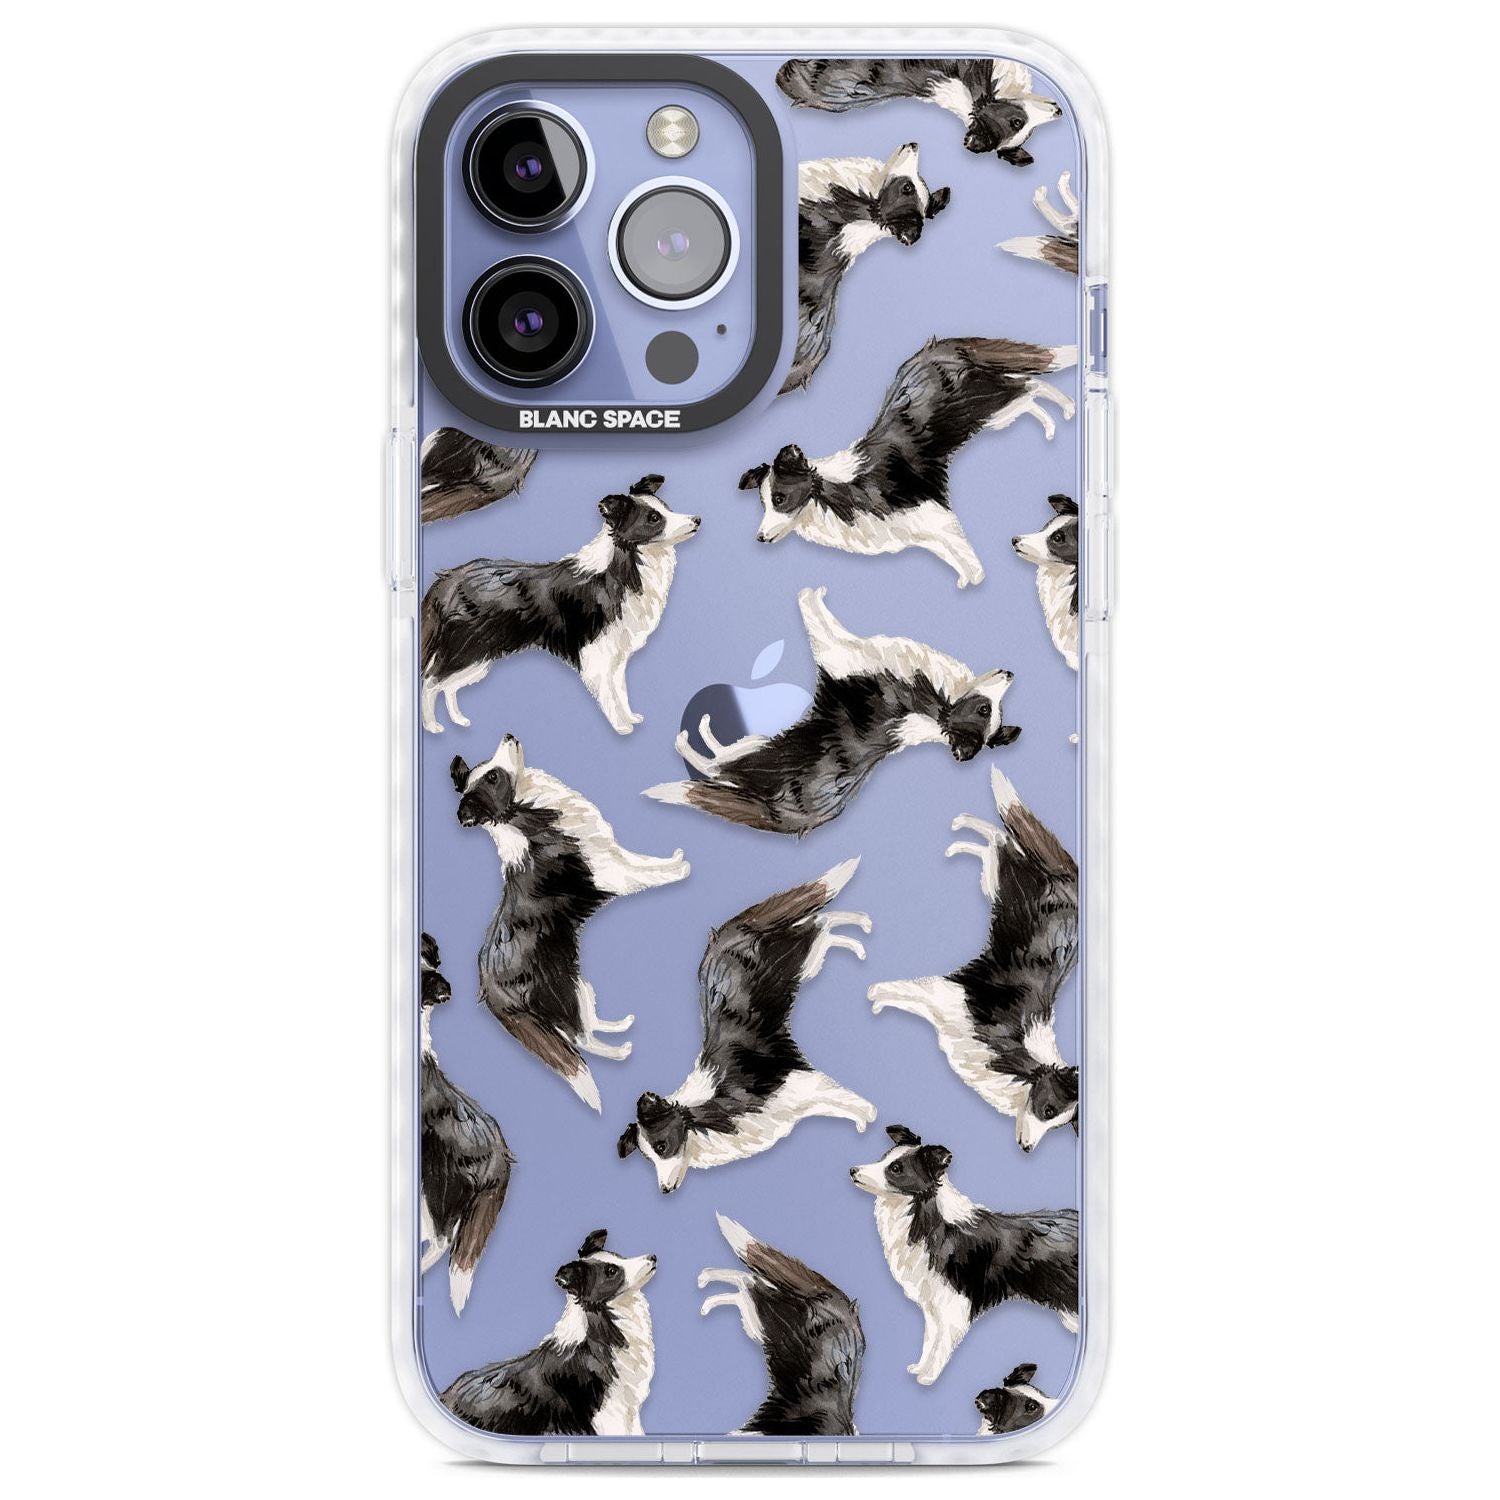 Border Collie Watercolour Dog Pattern Phone Case iPhone 13 Pro Max / Impact Case,iPhone 14 Pro Max / Impact Case Blanc Space